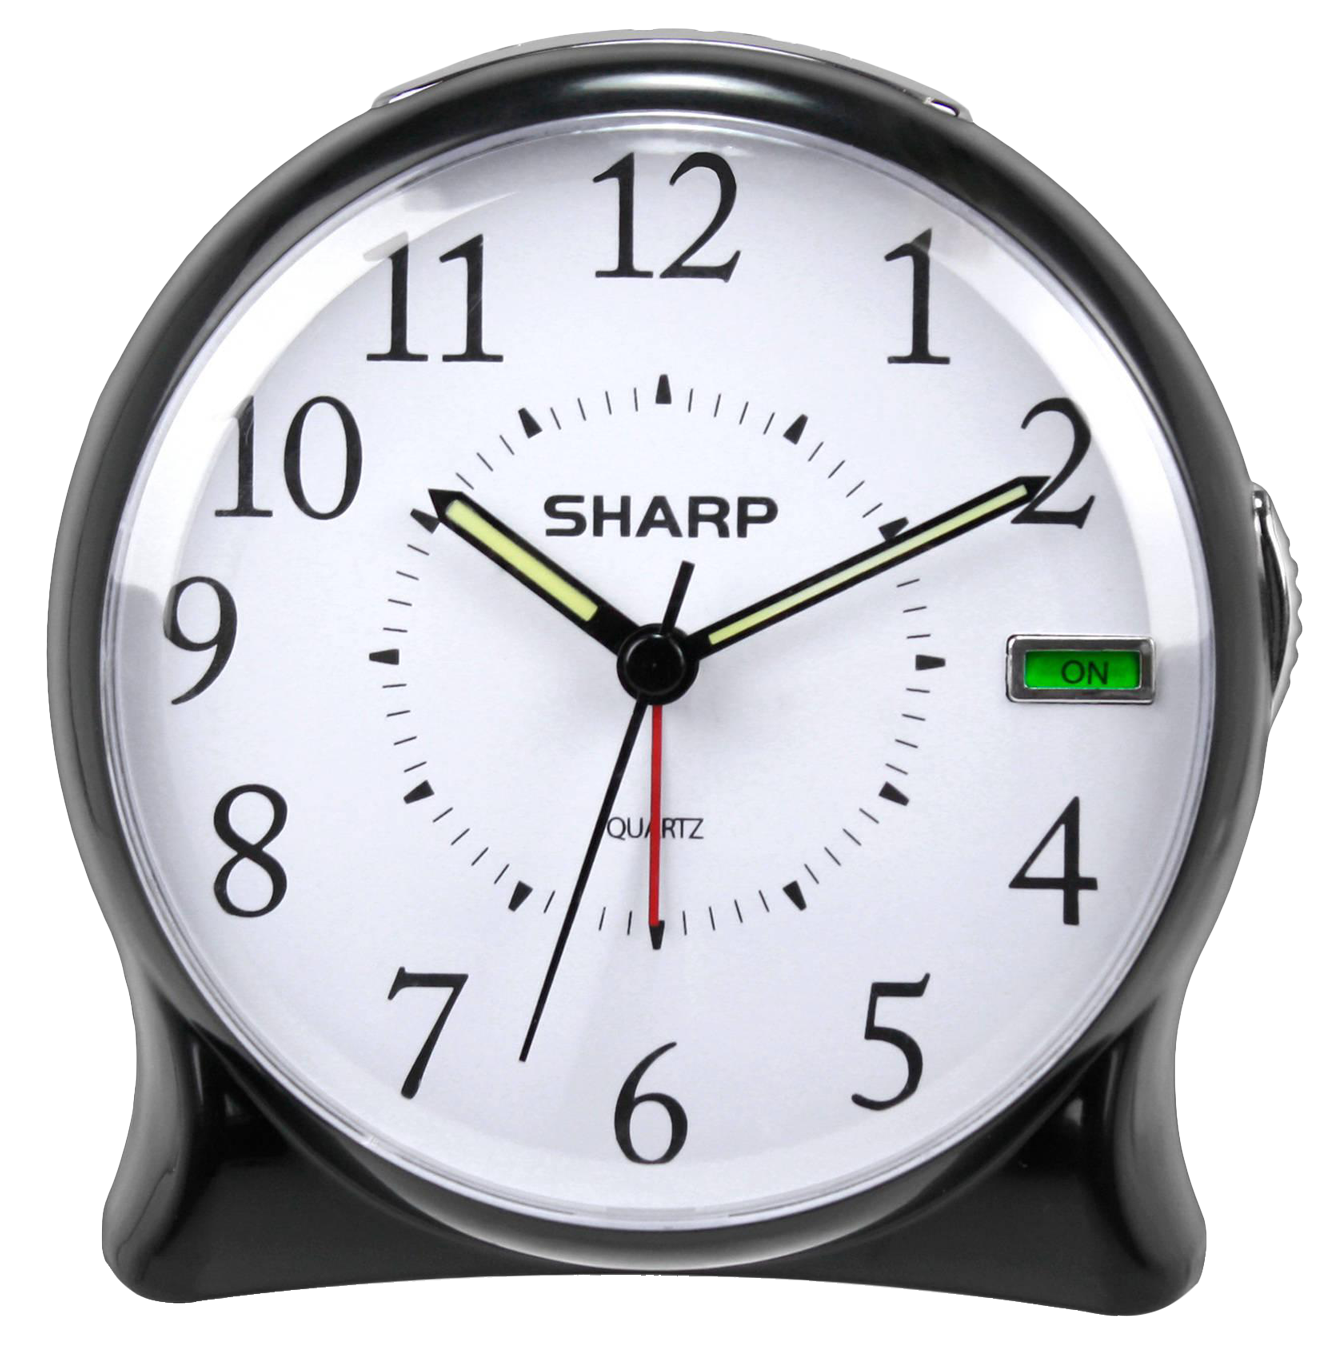 Analog Alarm Clock PNG Image - PurePNG | Free transparent CC0 PNG Image ...